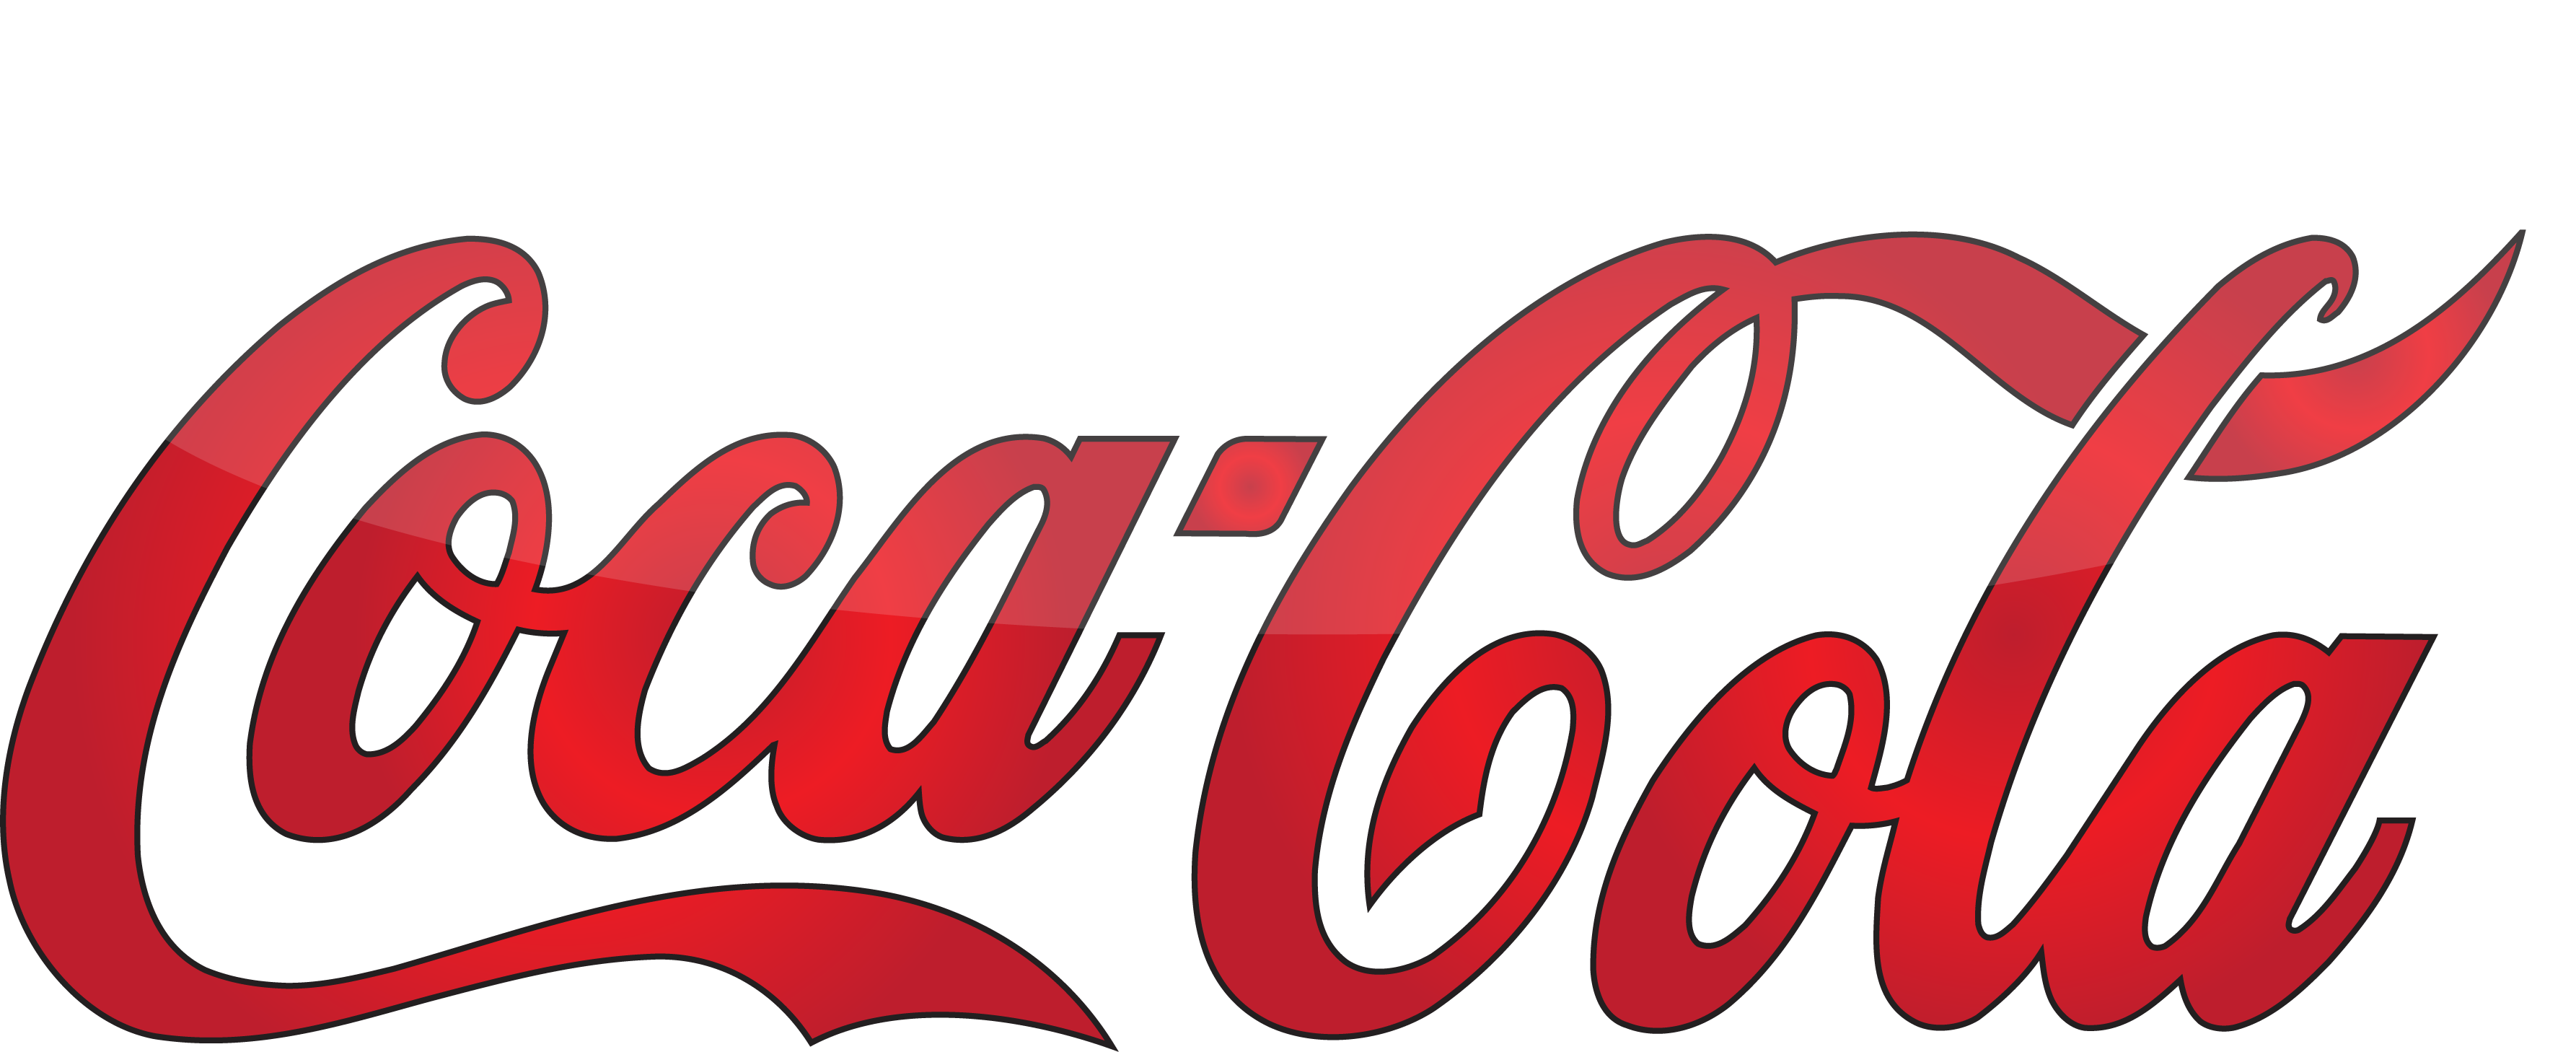 Coca Cola Logo Png Image   Coca Cola Logo Png Image